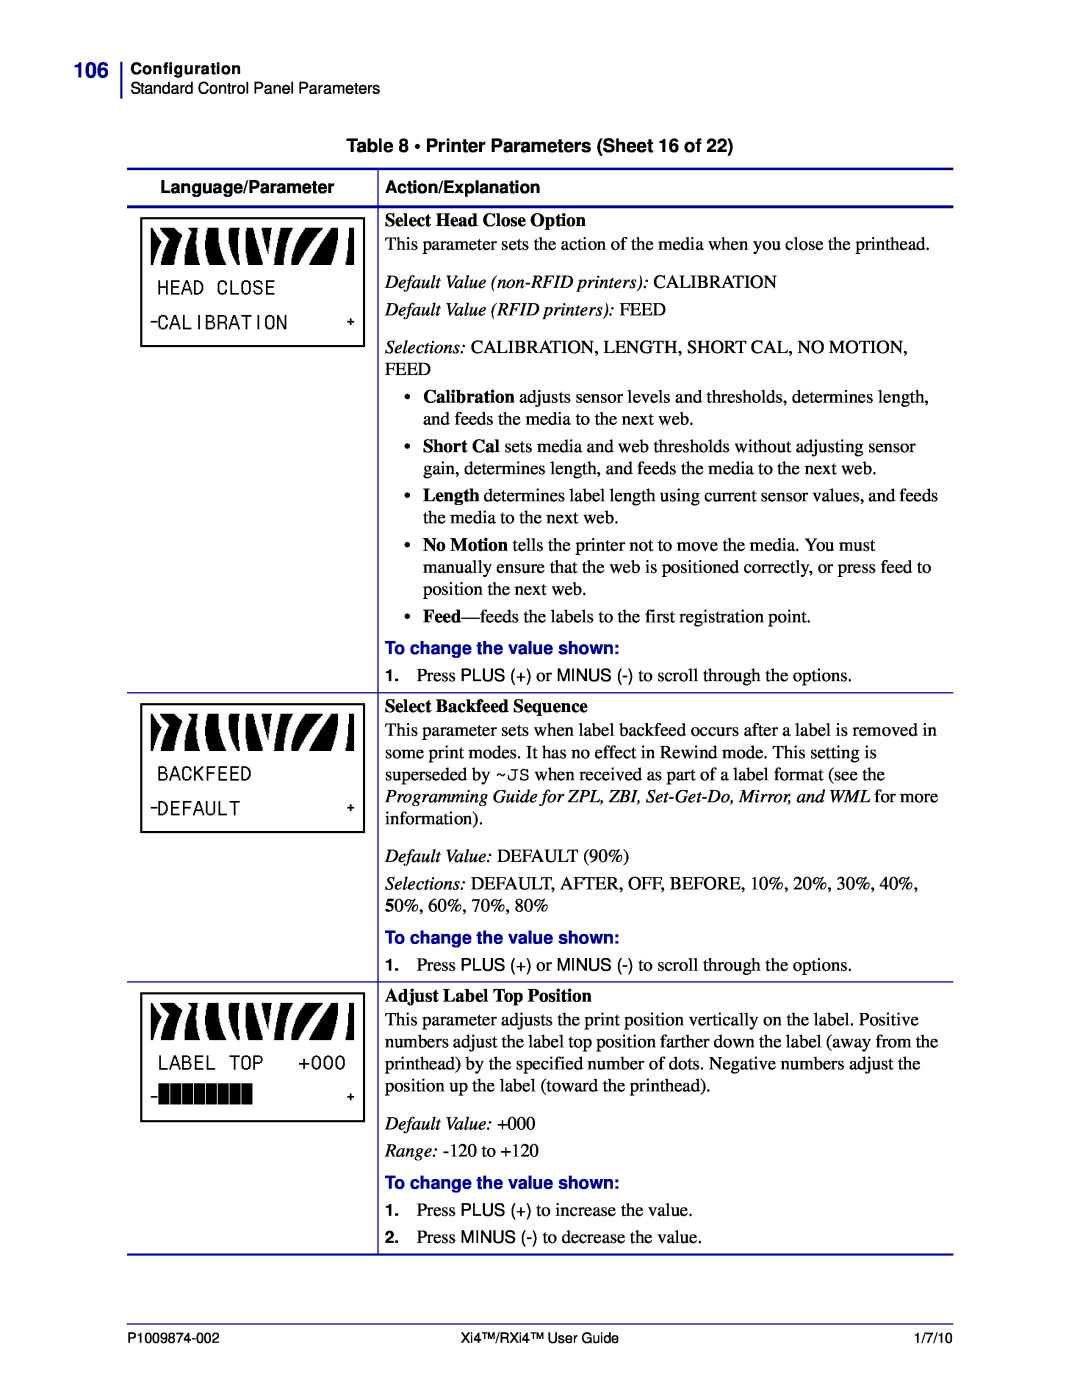 Zebra Technologies RXI4TM manual Printer Parameters Sheet 16 of, Select Head Close Option, Default Value RFID printers FEED 